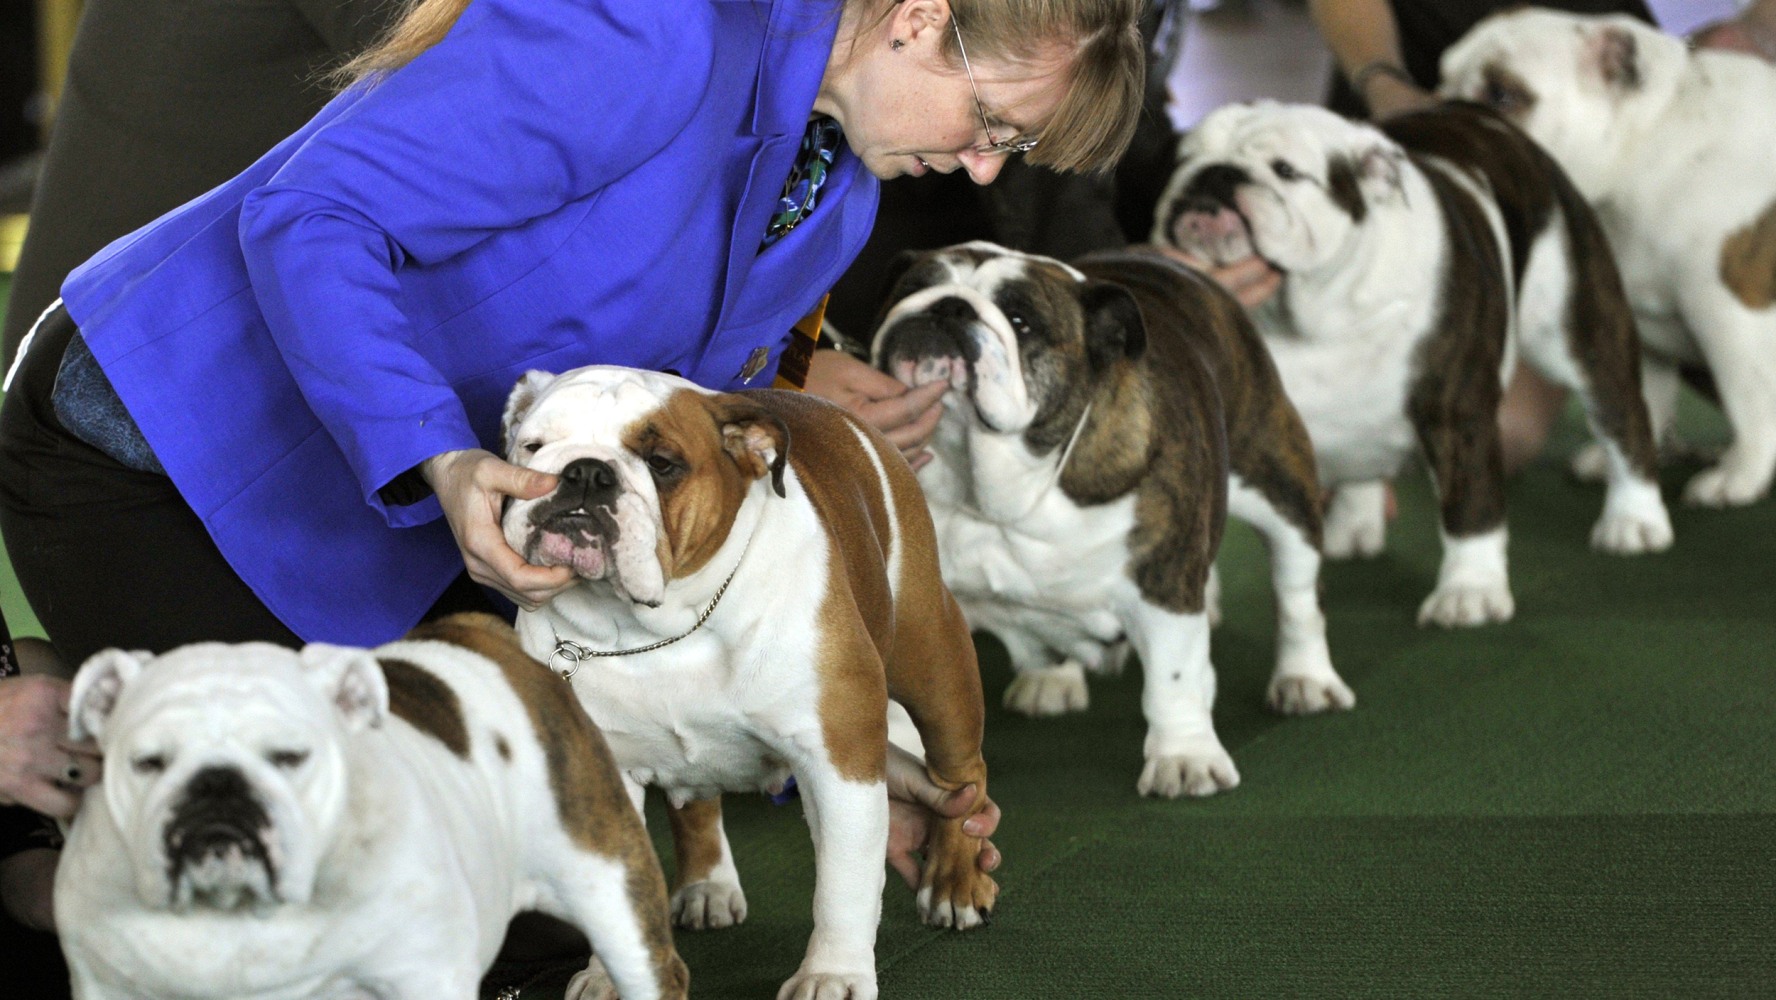 Precious jowls Bulldogs show gamut of emotions at dog